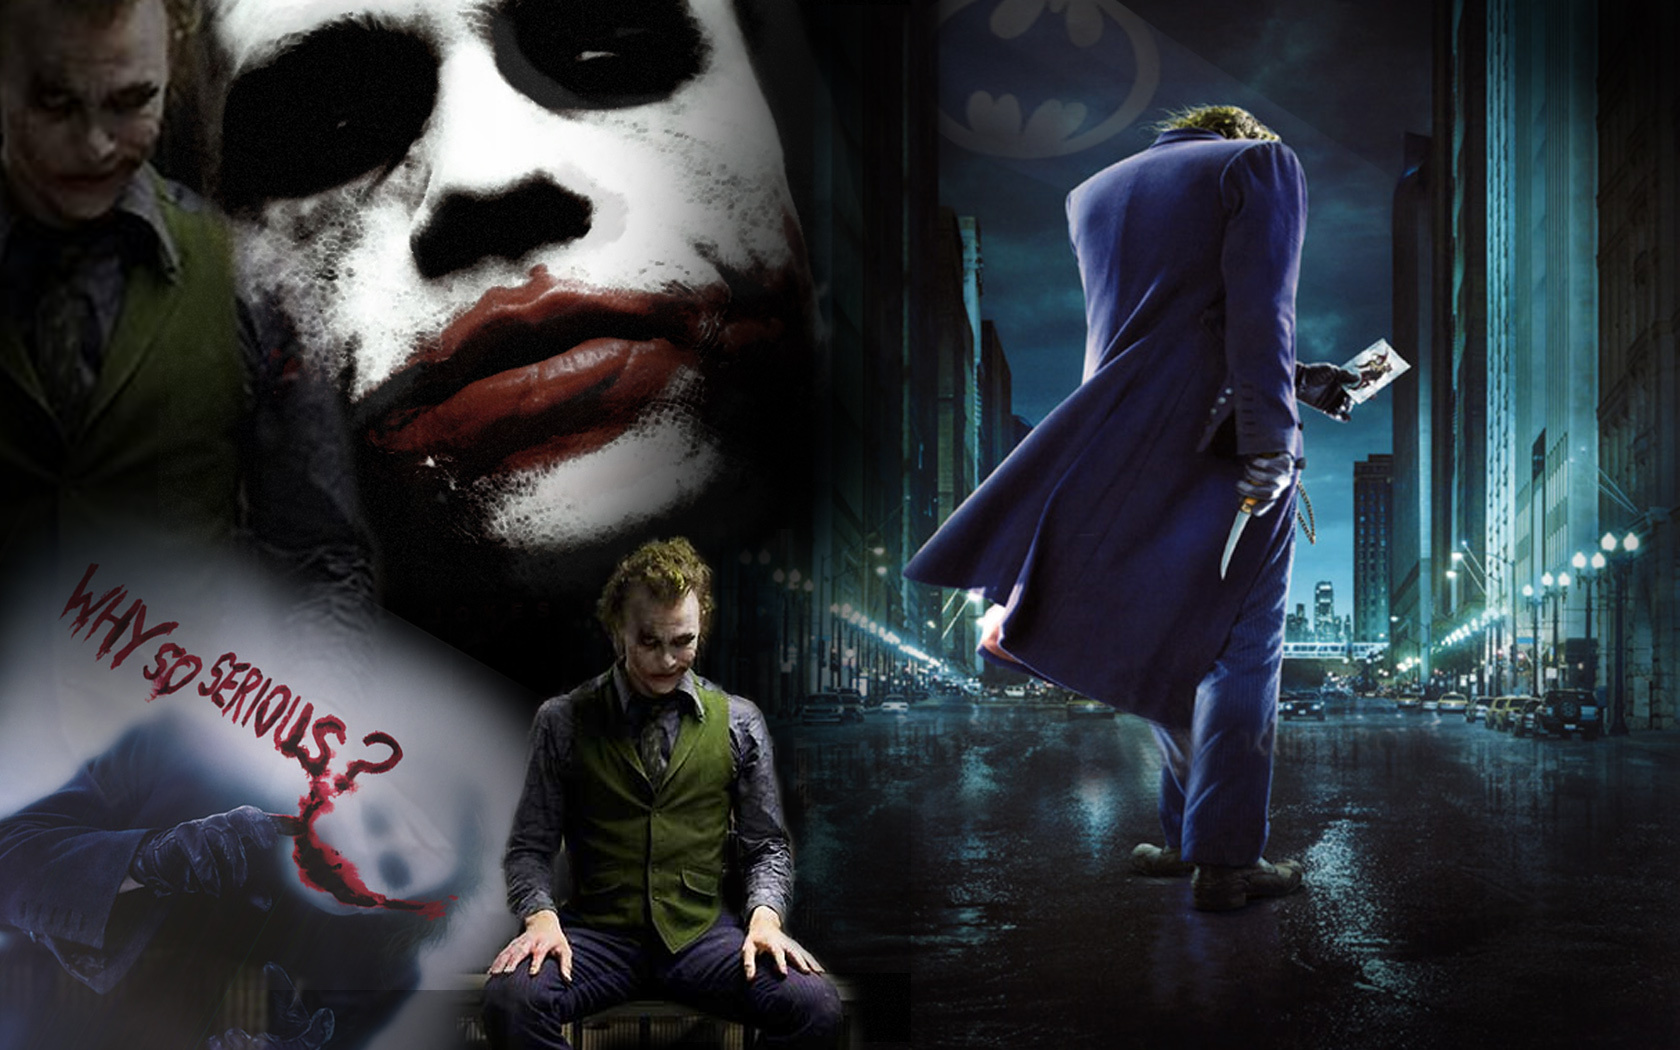 48+] Heath Ledger The Joker Wallpapers - WallpaperSafari